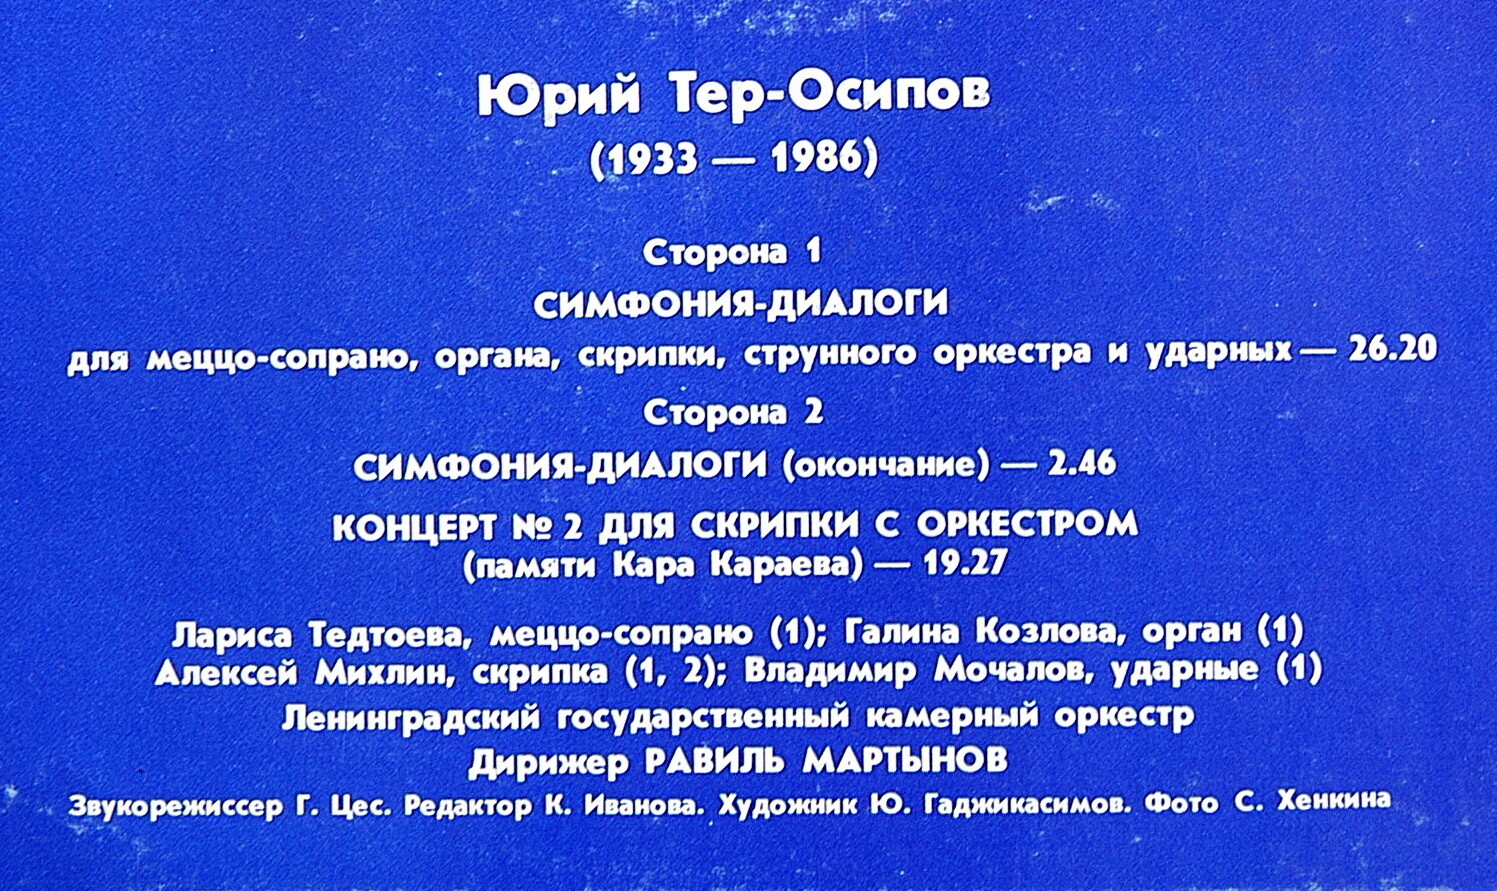 Ю. ТЕР-ОСИПОВ (1933-1986). Диалоги